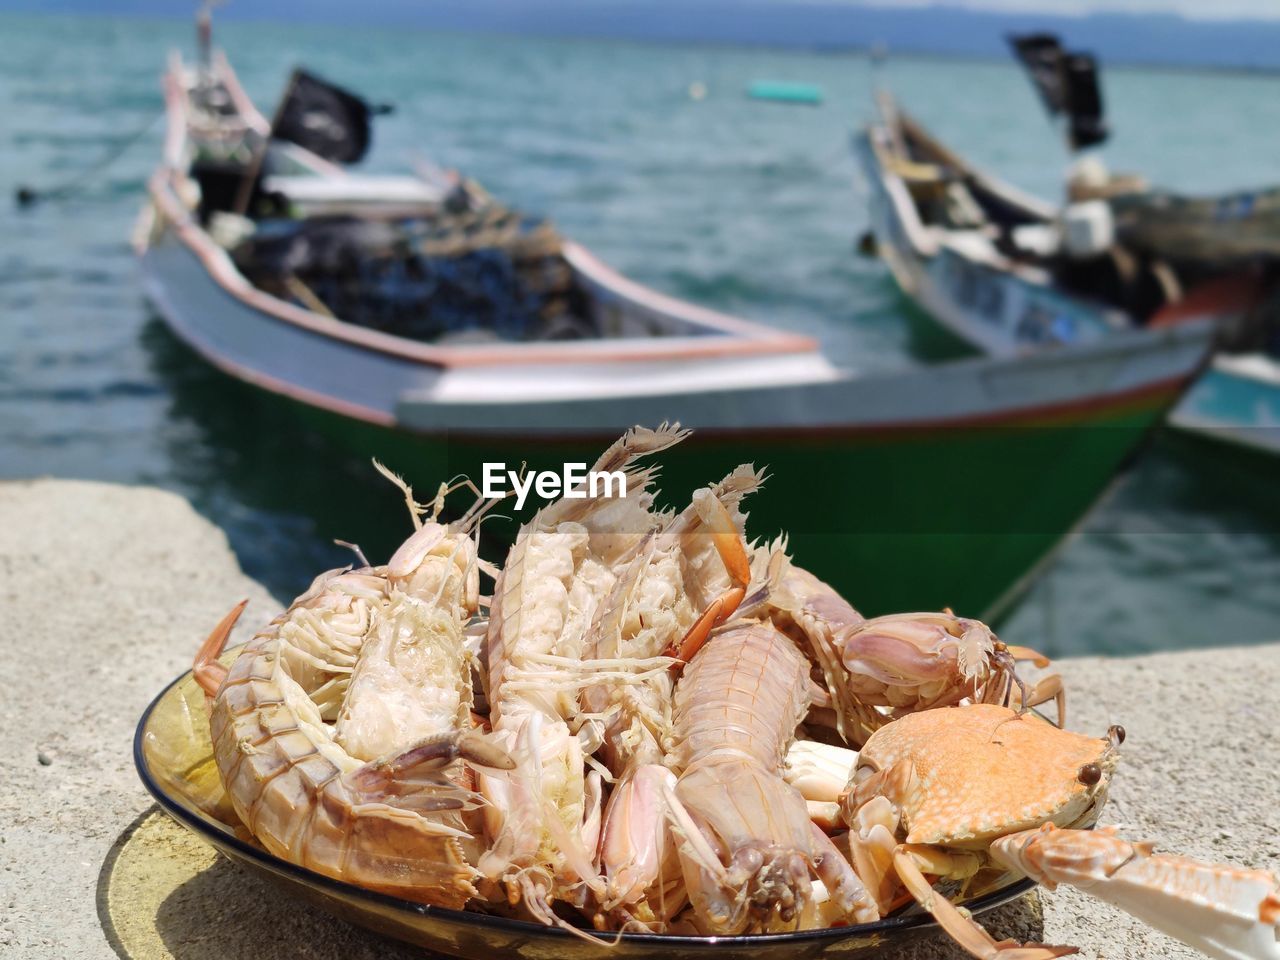 Indonesia seafood 